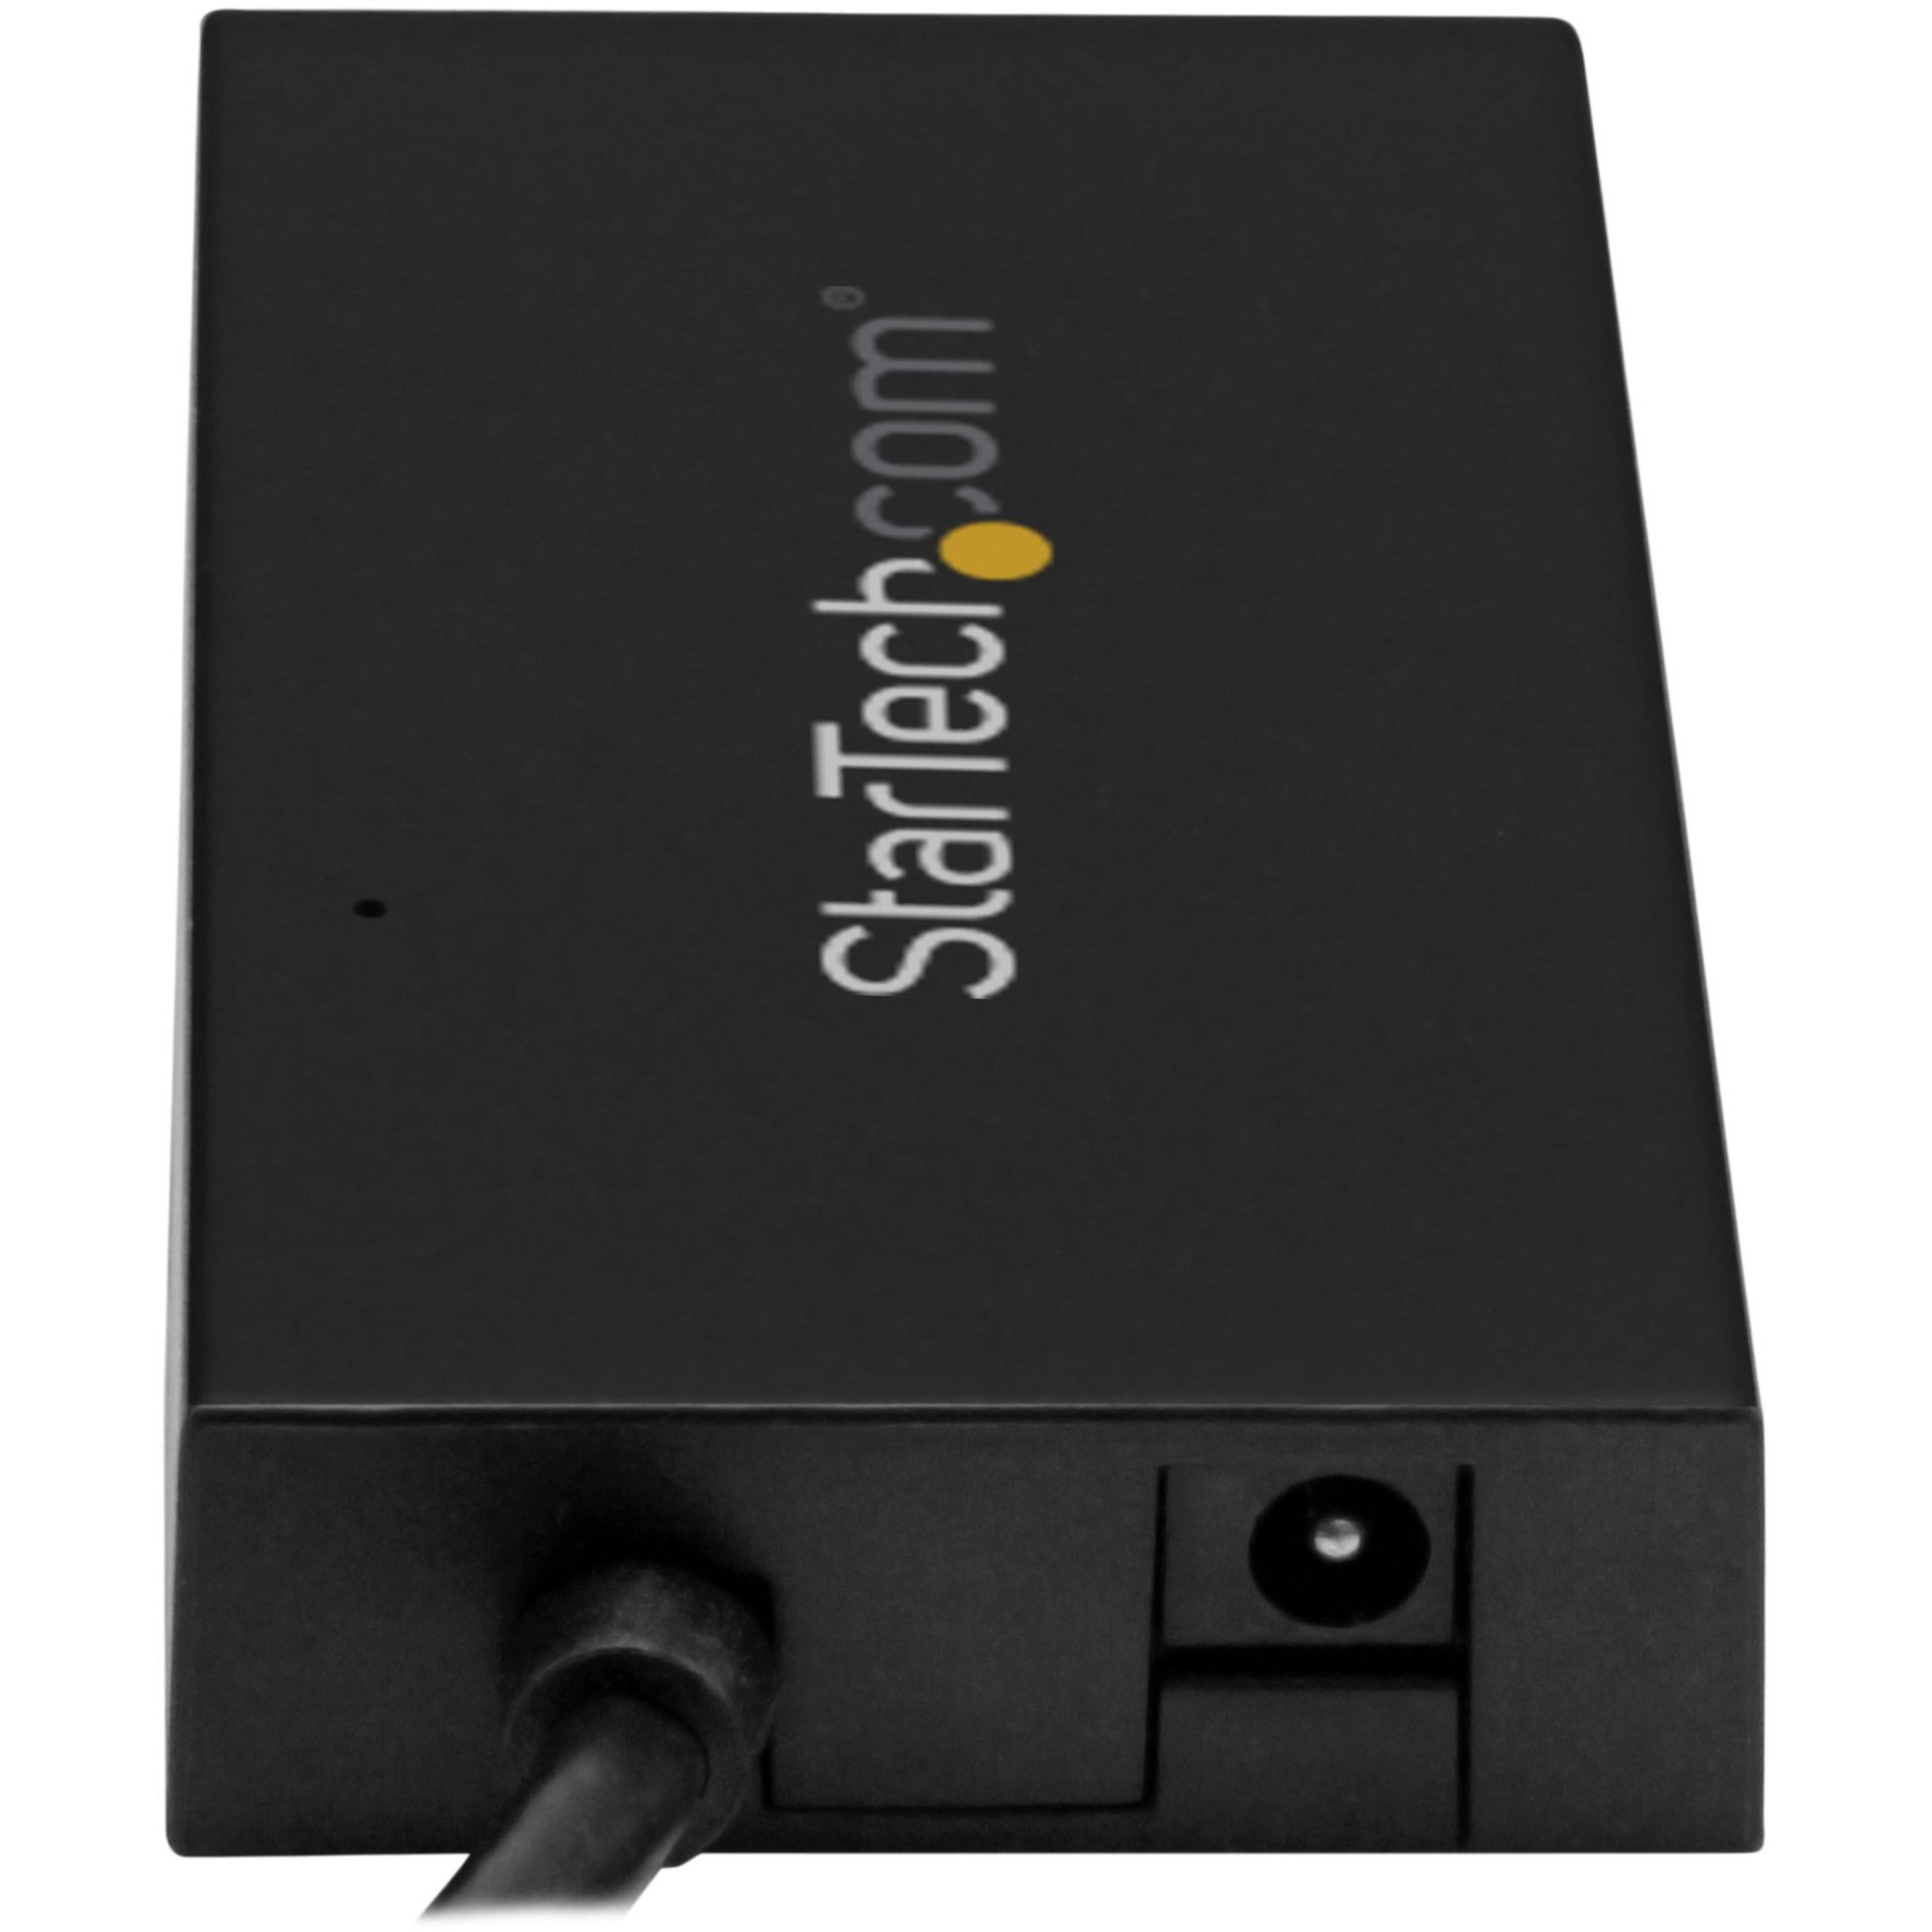 Startech .com 4 Port USB 3.0 HubUSB-A to USB-C & 3x USB-A SuperSpeed 5GbpsSelf or USB Bus PoweredUSB 3.1 Gen 1 BC 1.2 Charging Hub… HB30A3A1CSFS